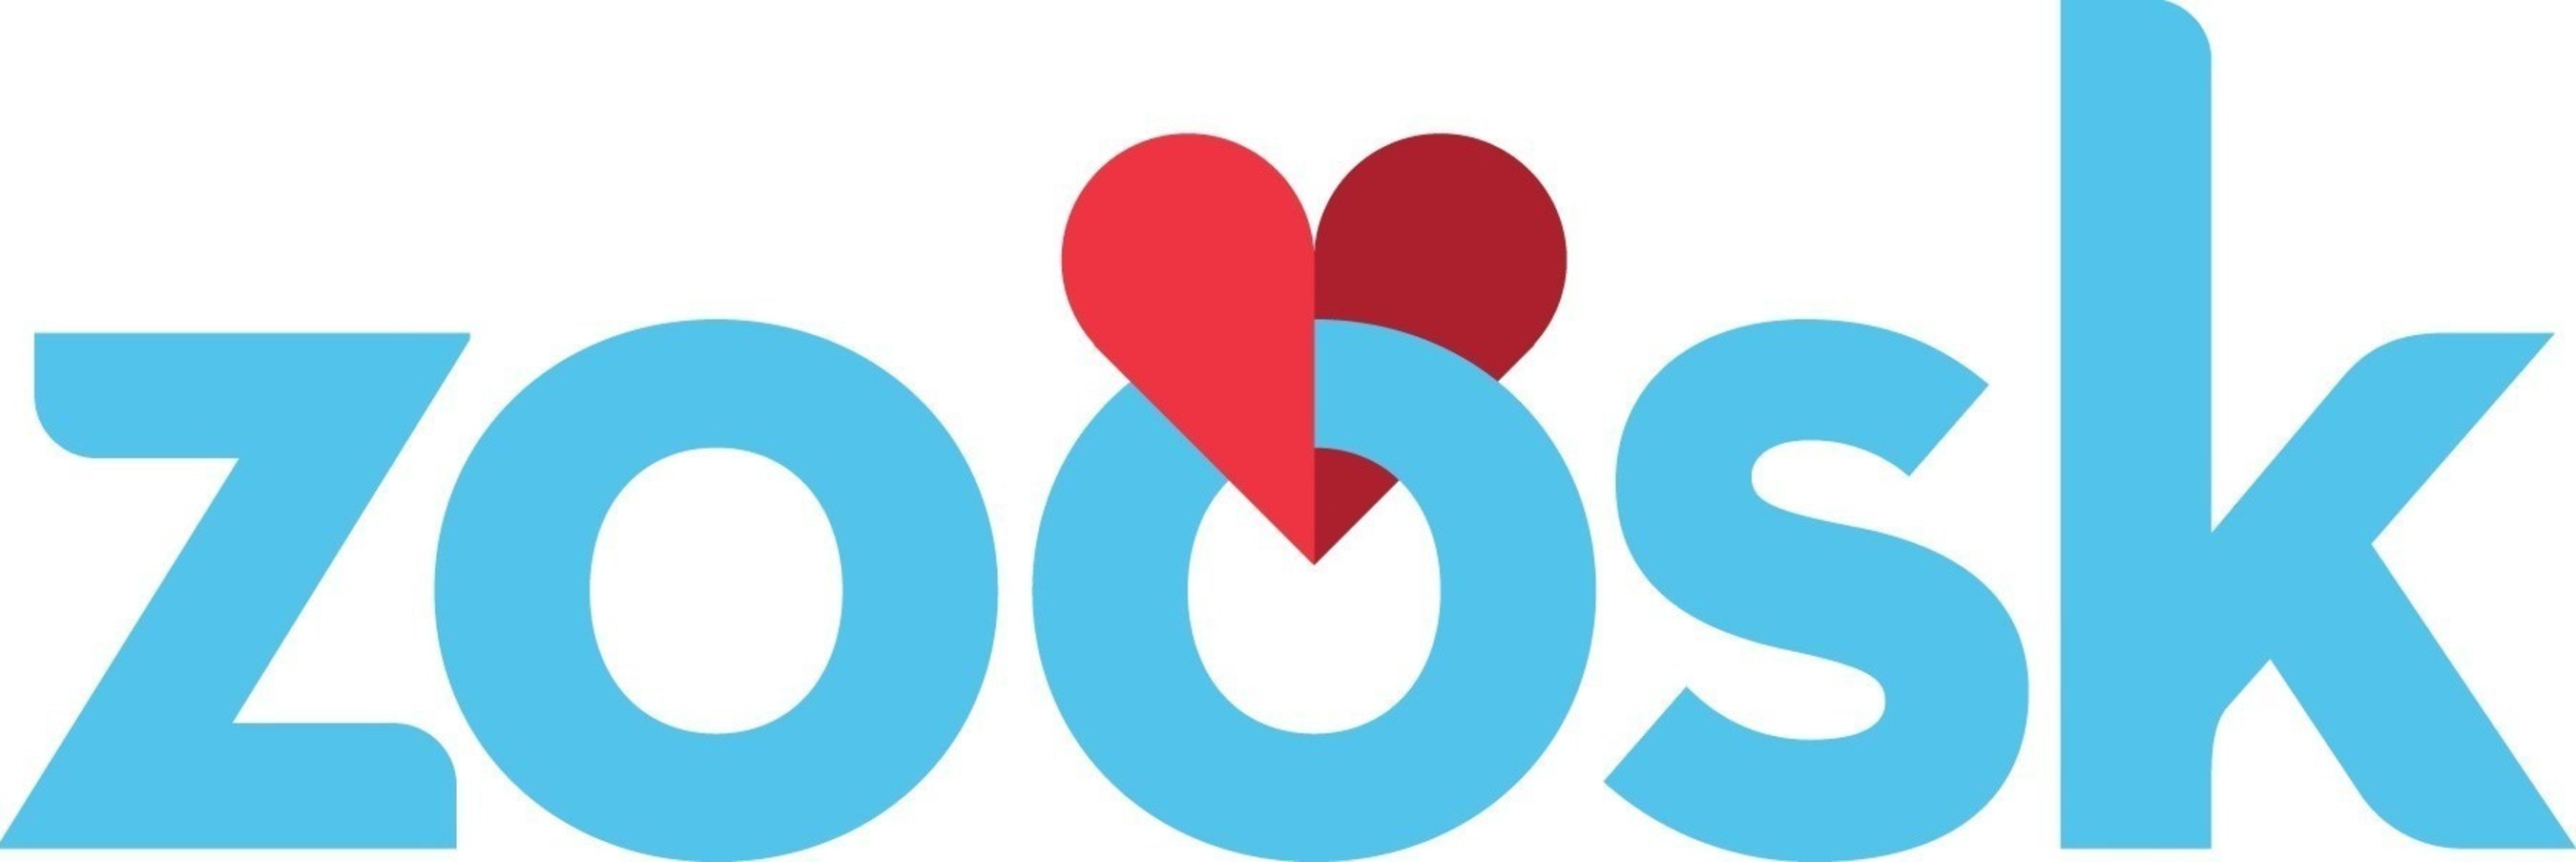 logo zoosk